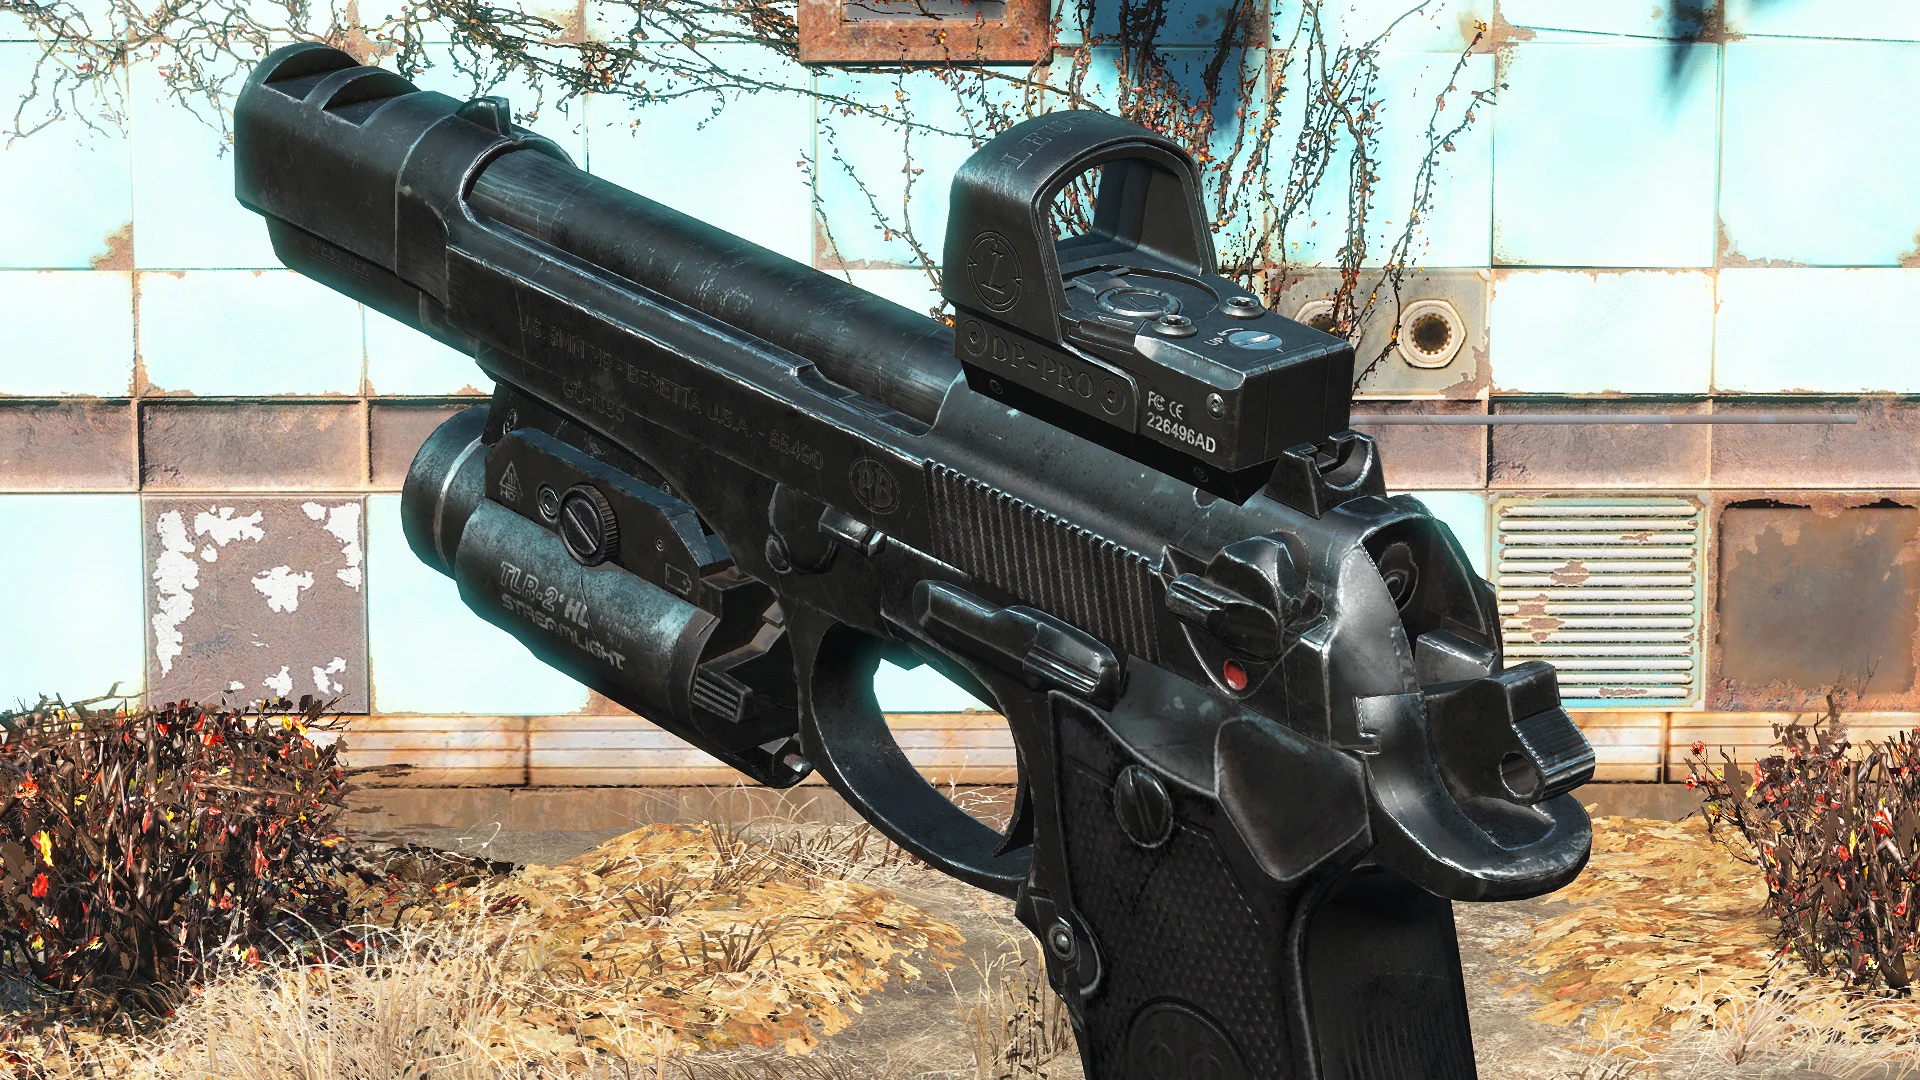 Beretta M9-FS Pistol (92FS) at Fallout 4 Nexus - Mods and community